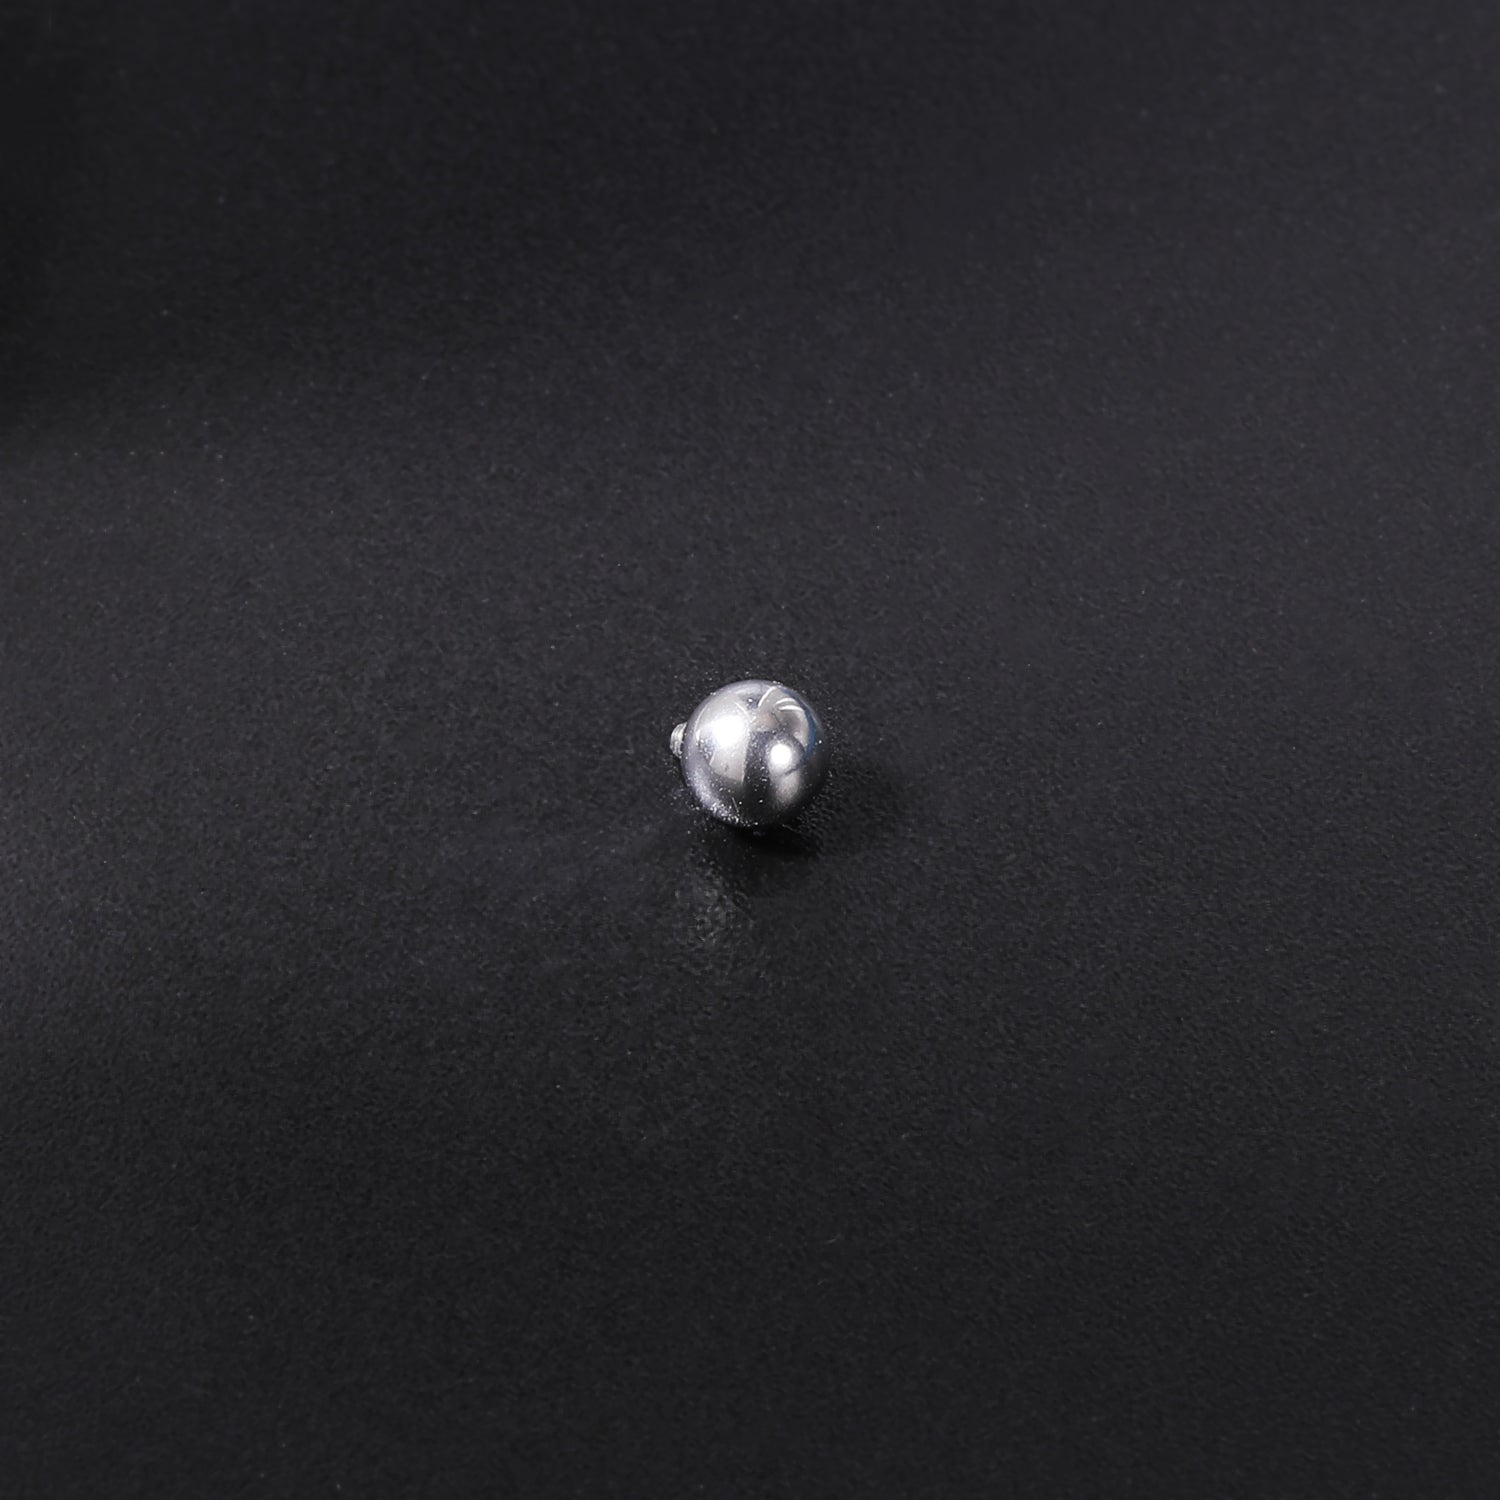 16g-steel-ball-dermal-anchor-tops-threaded-piercing-kit